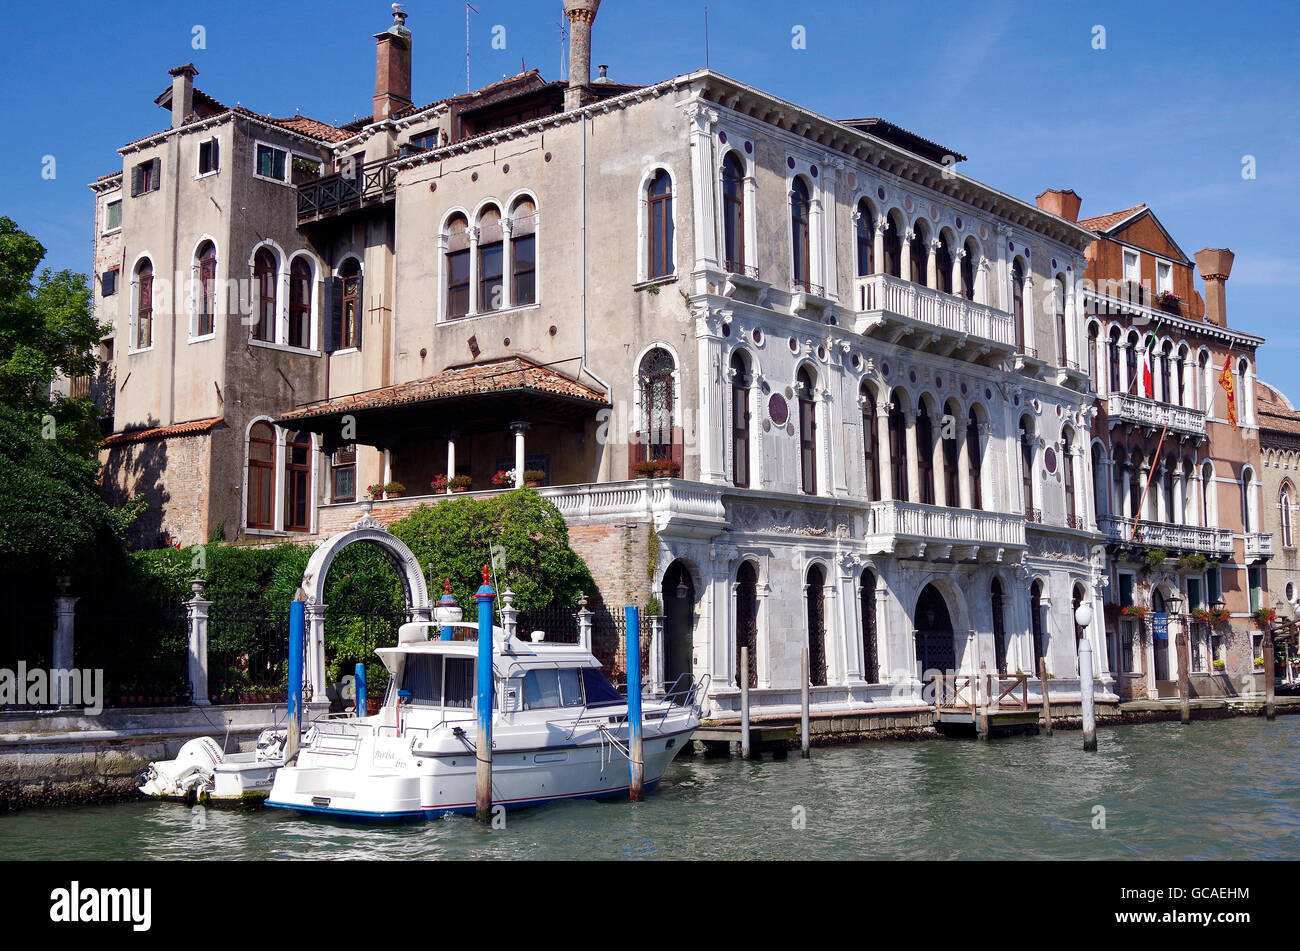 Venice, Italy, Palazzo Contarini dal Zaffo, Grand Canal Stock Photo - Alamy